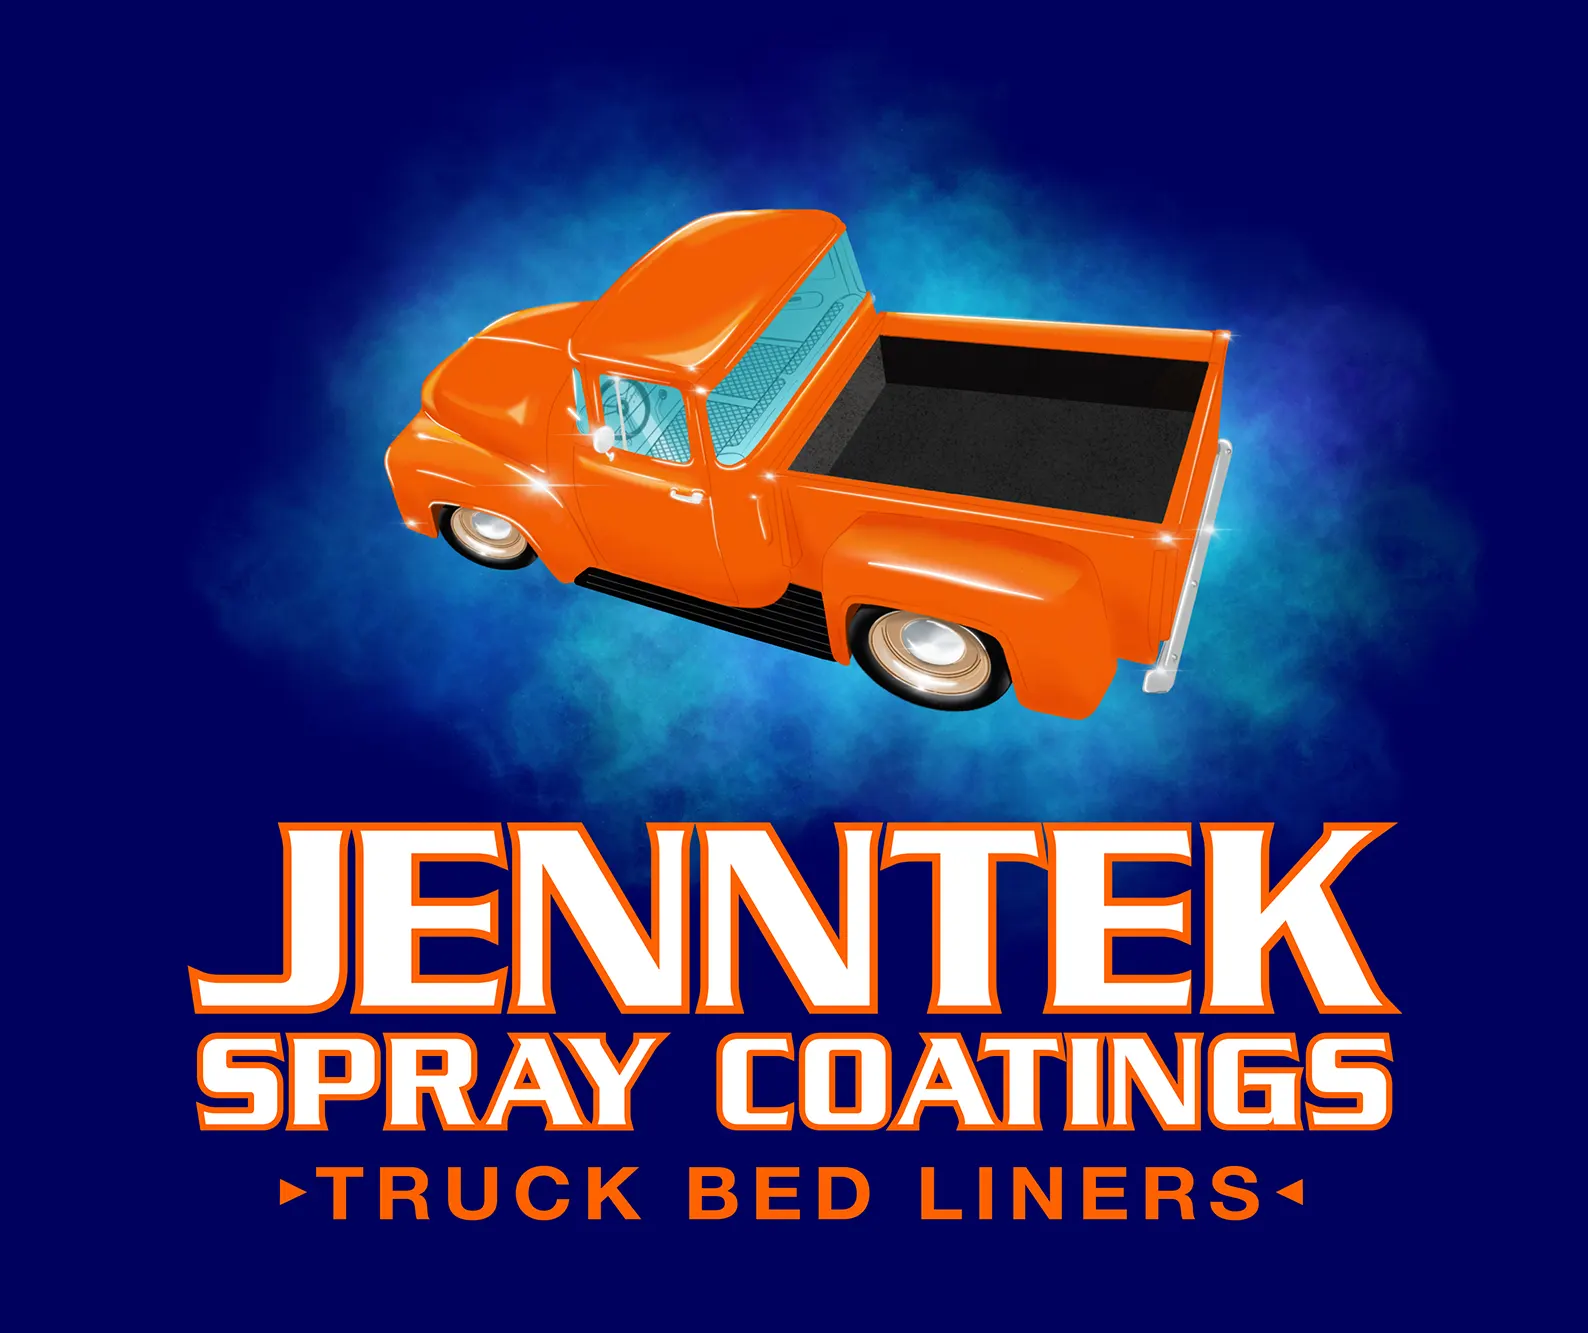 JennTek Spray Coatings truck bed liners logo.